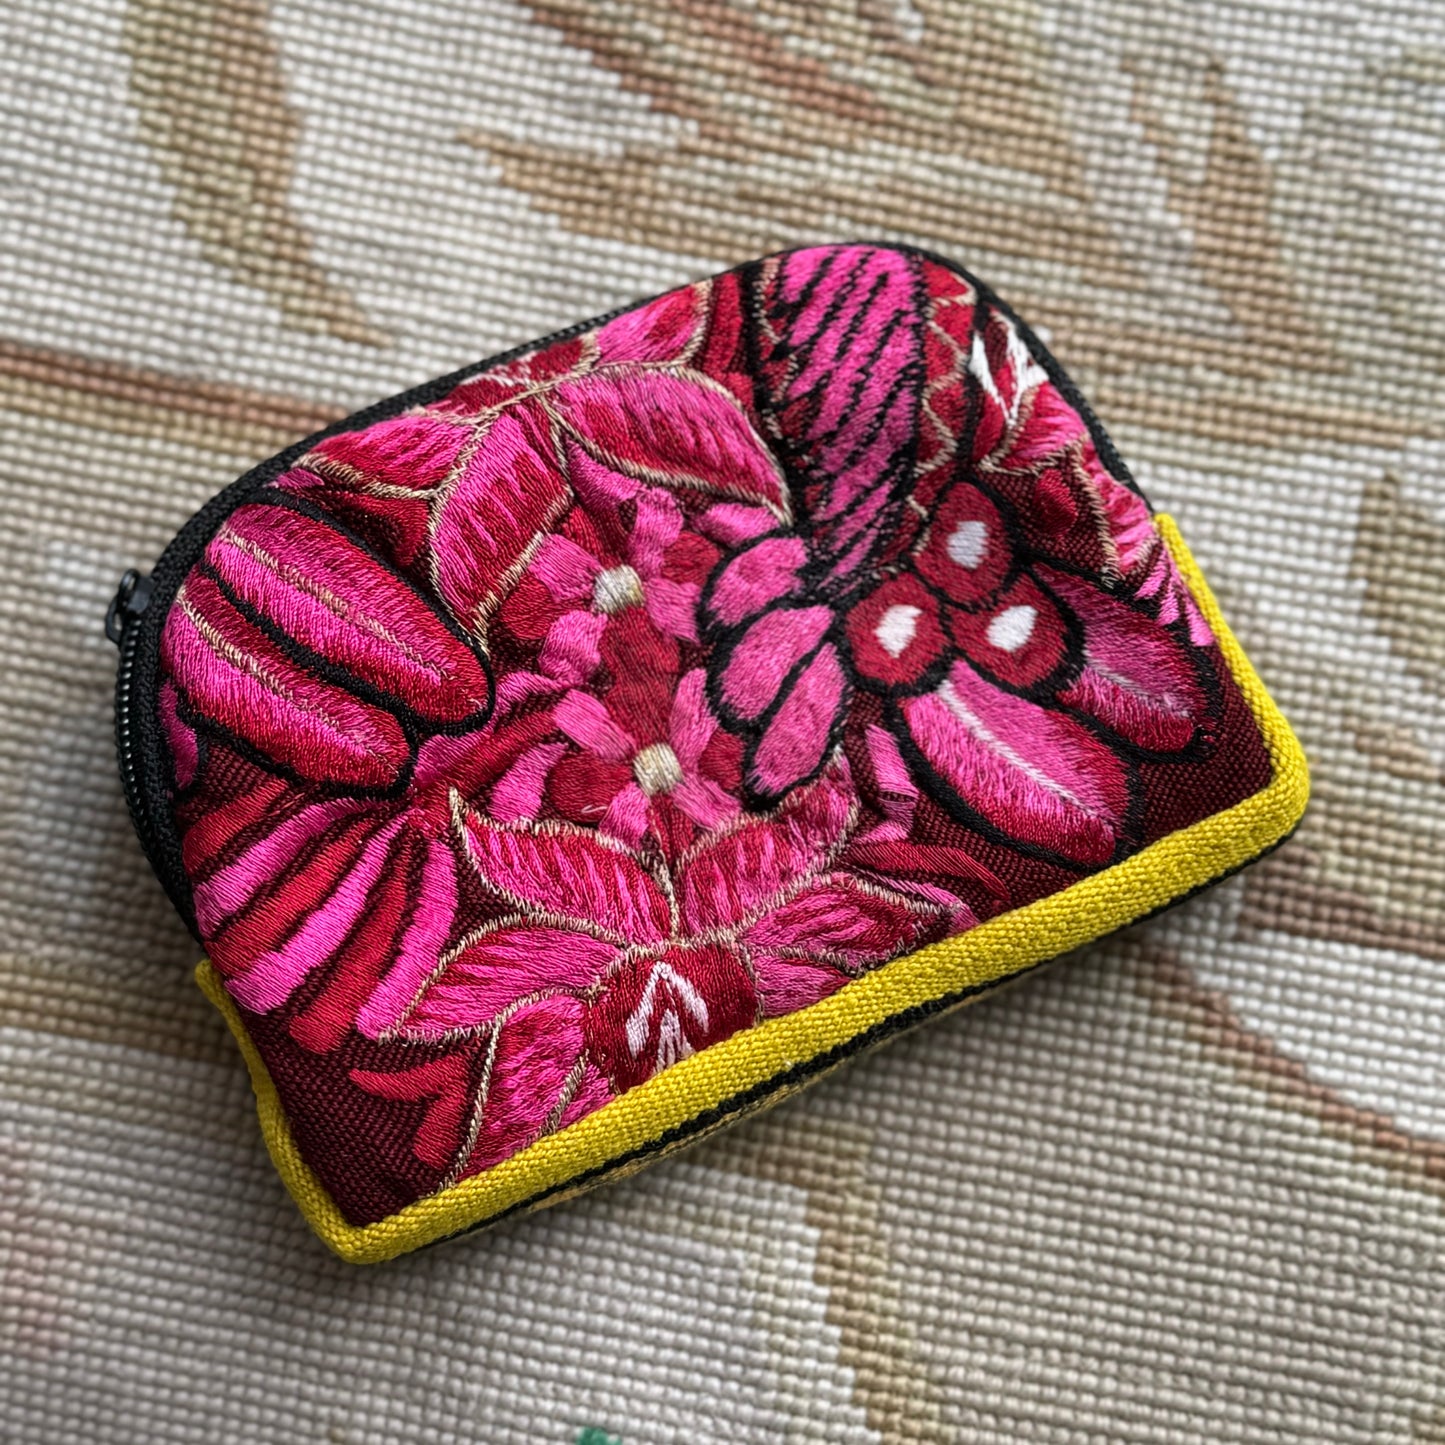 Mita Embroidered Pouches